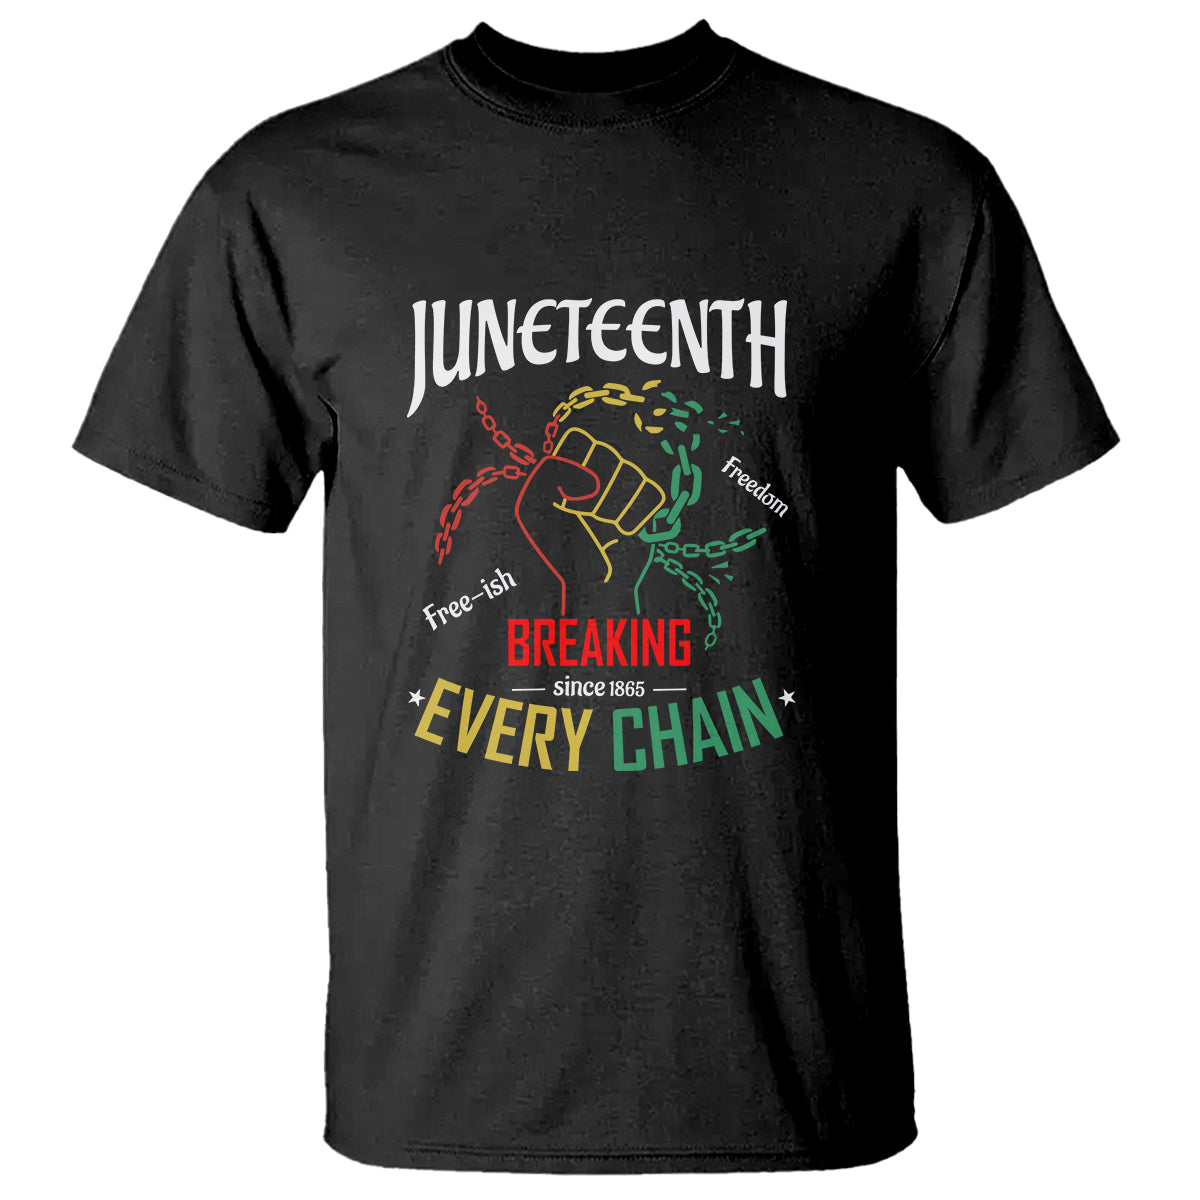 Juneteenth T Shirt Breaking Every Chain Since 1865 TS01 Black Printyourwear